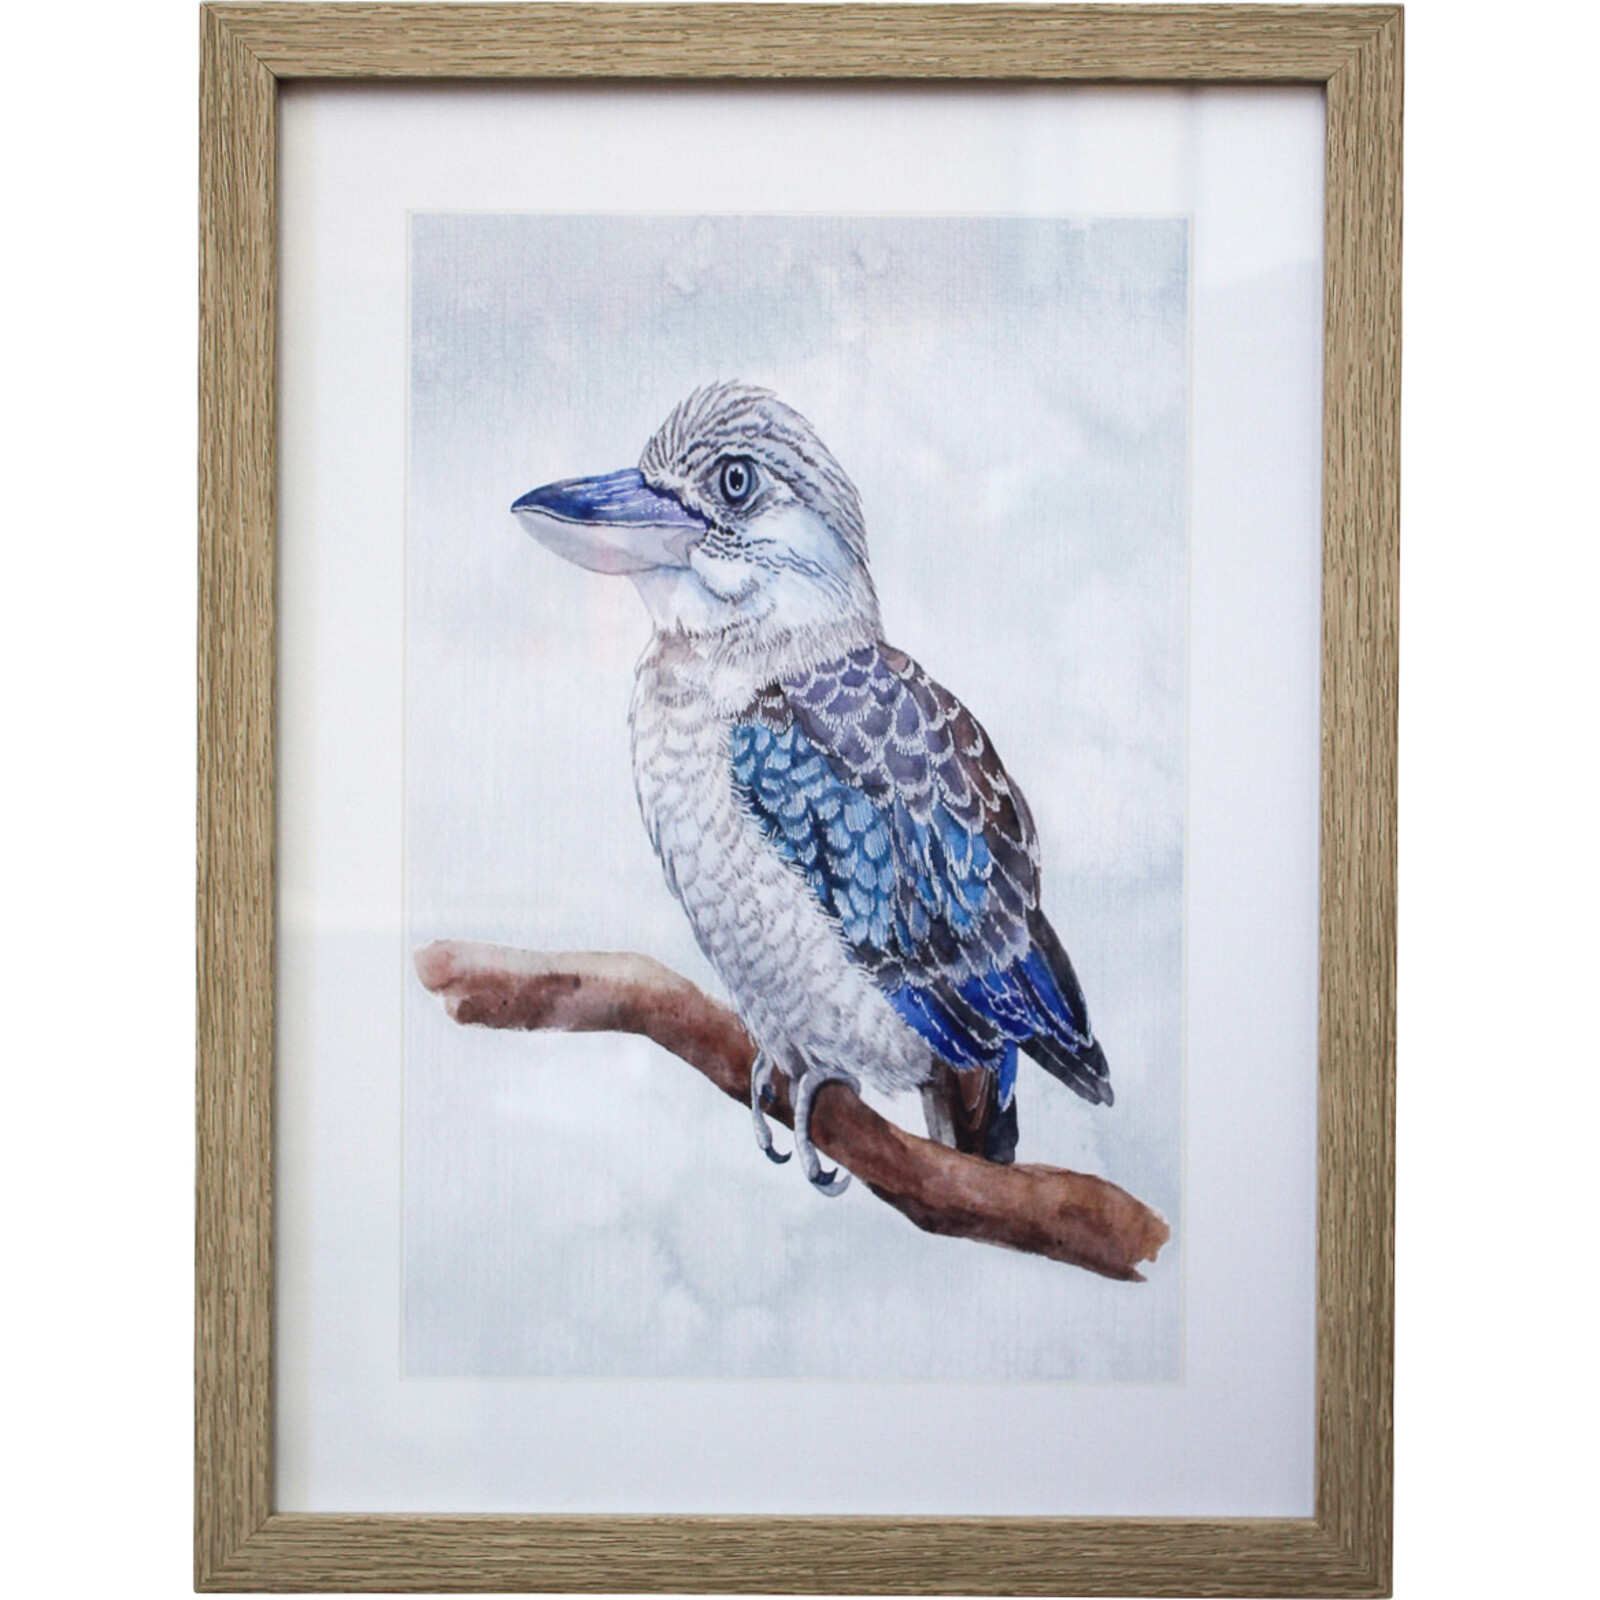 Framed Print Kookaburra